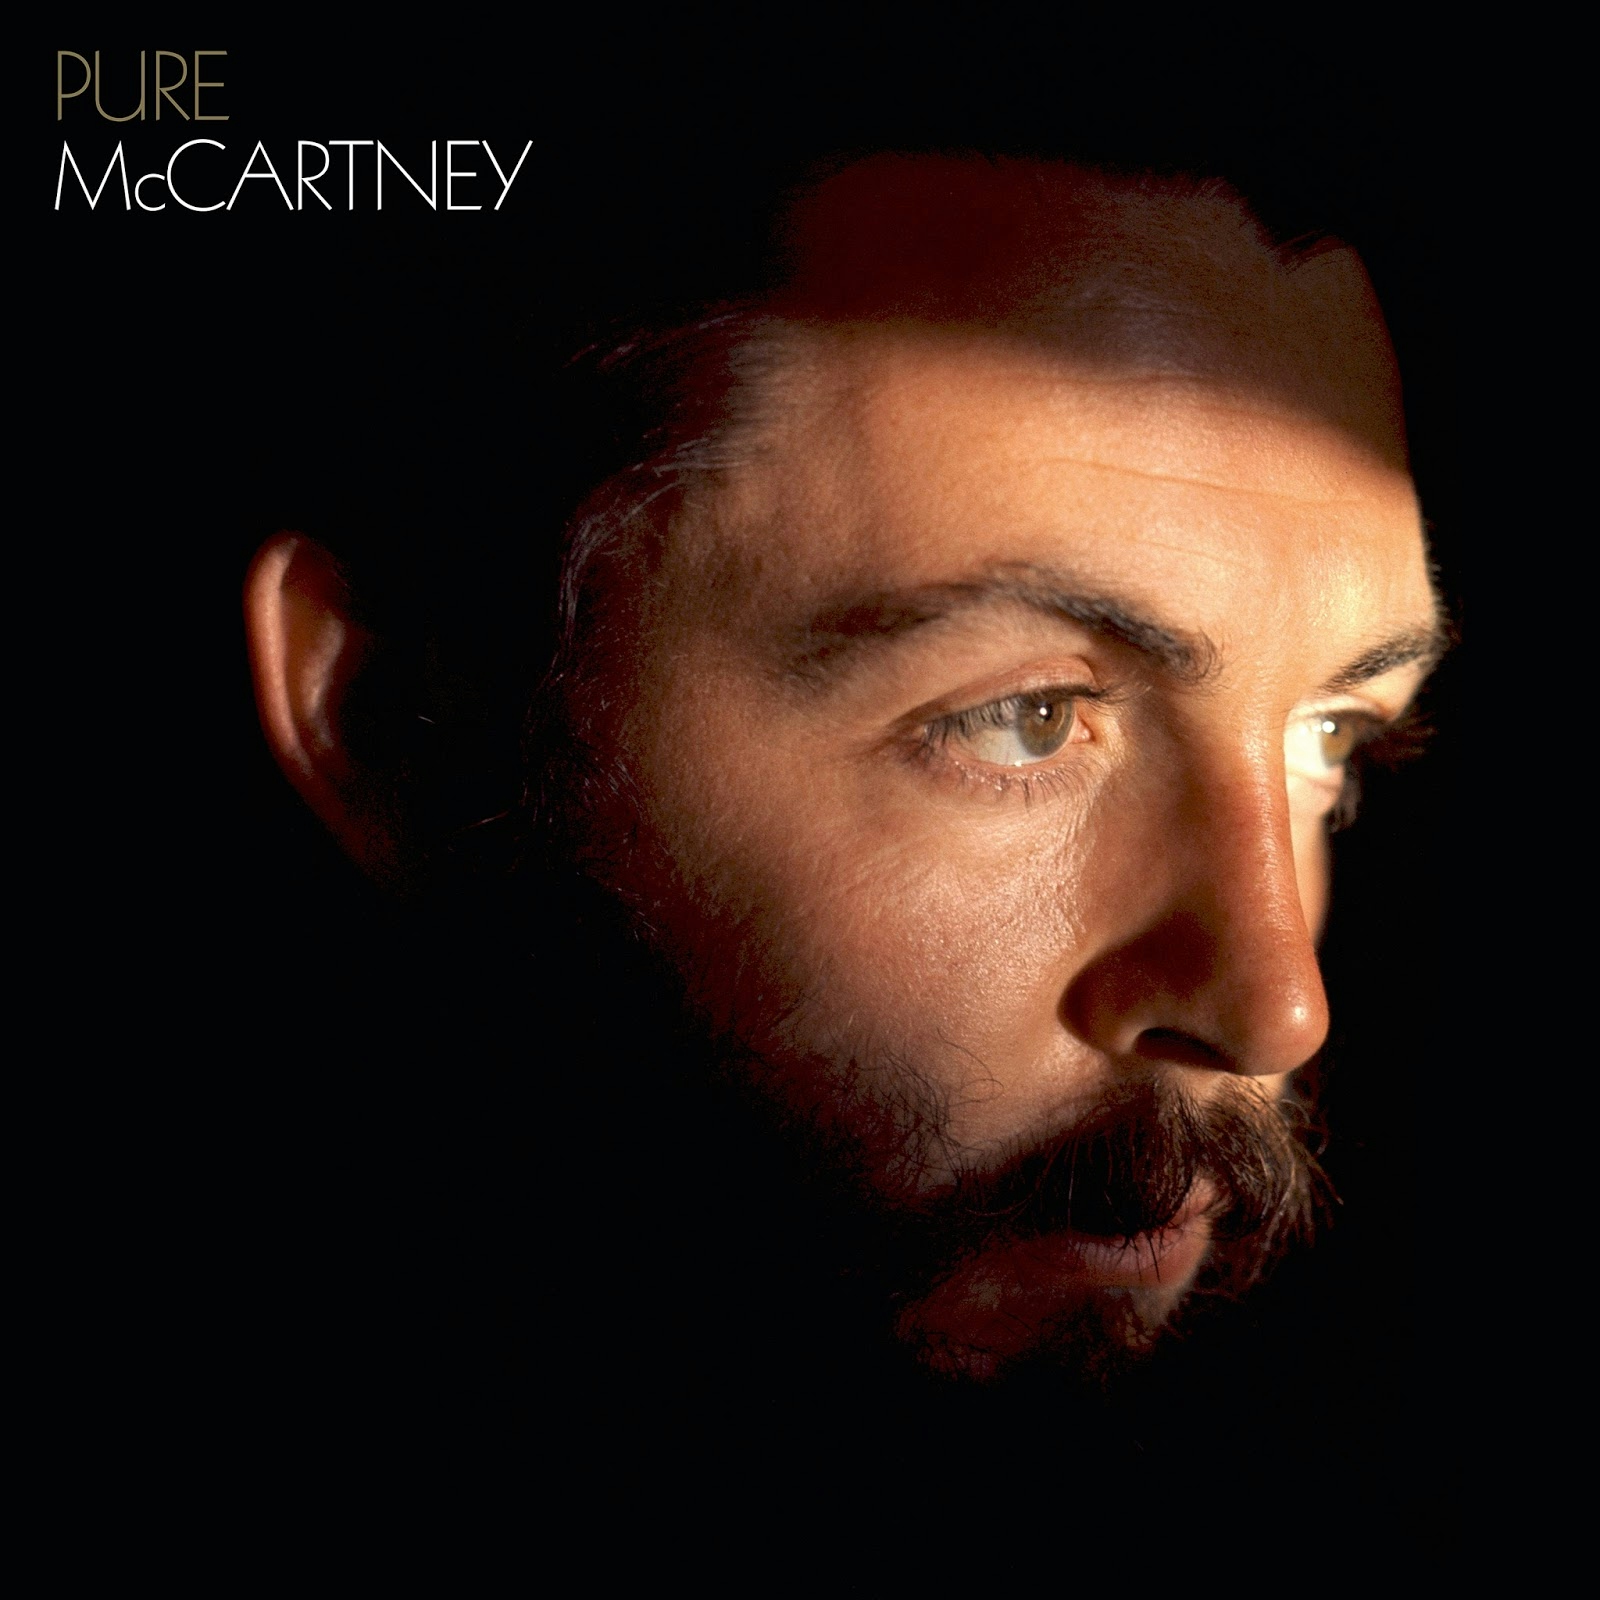 Album artwork for Pure Mccartney by Paul McCartney